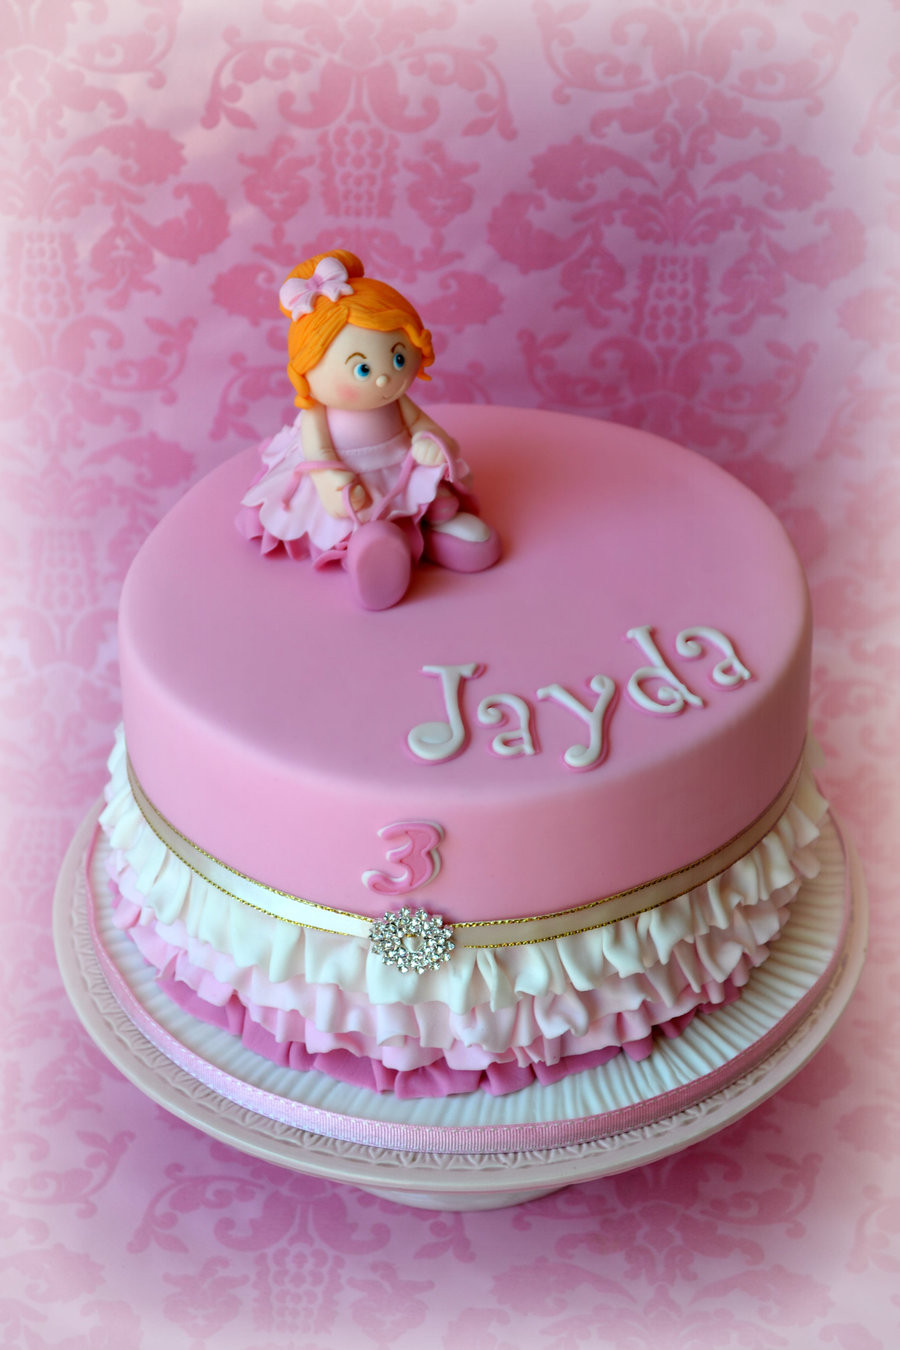 Little Girls Birthday Cakes
 Birthday Cake For A Little Girl Who Loves To Dance The